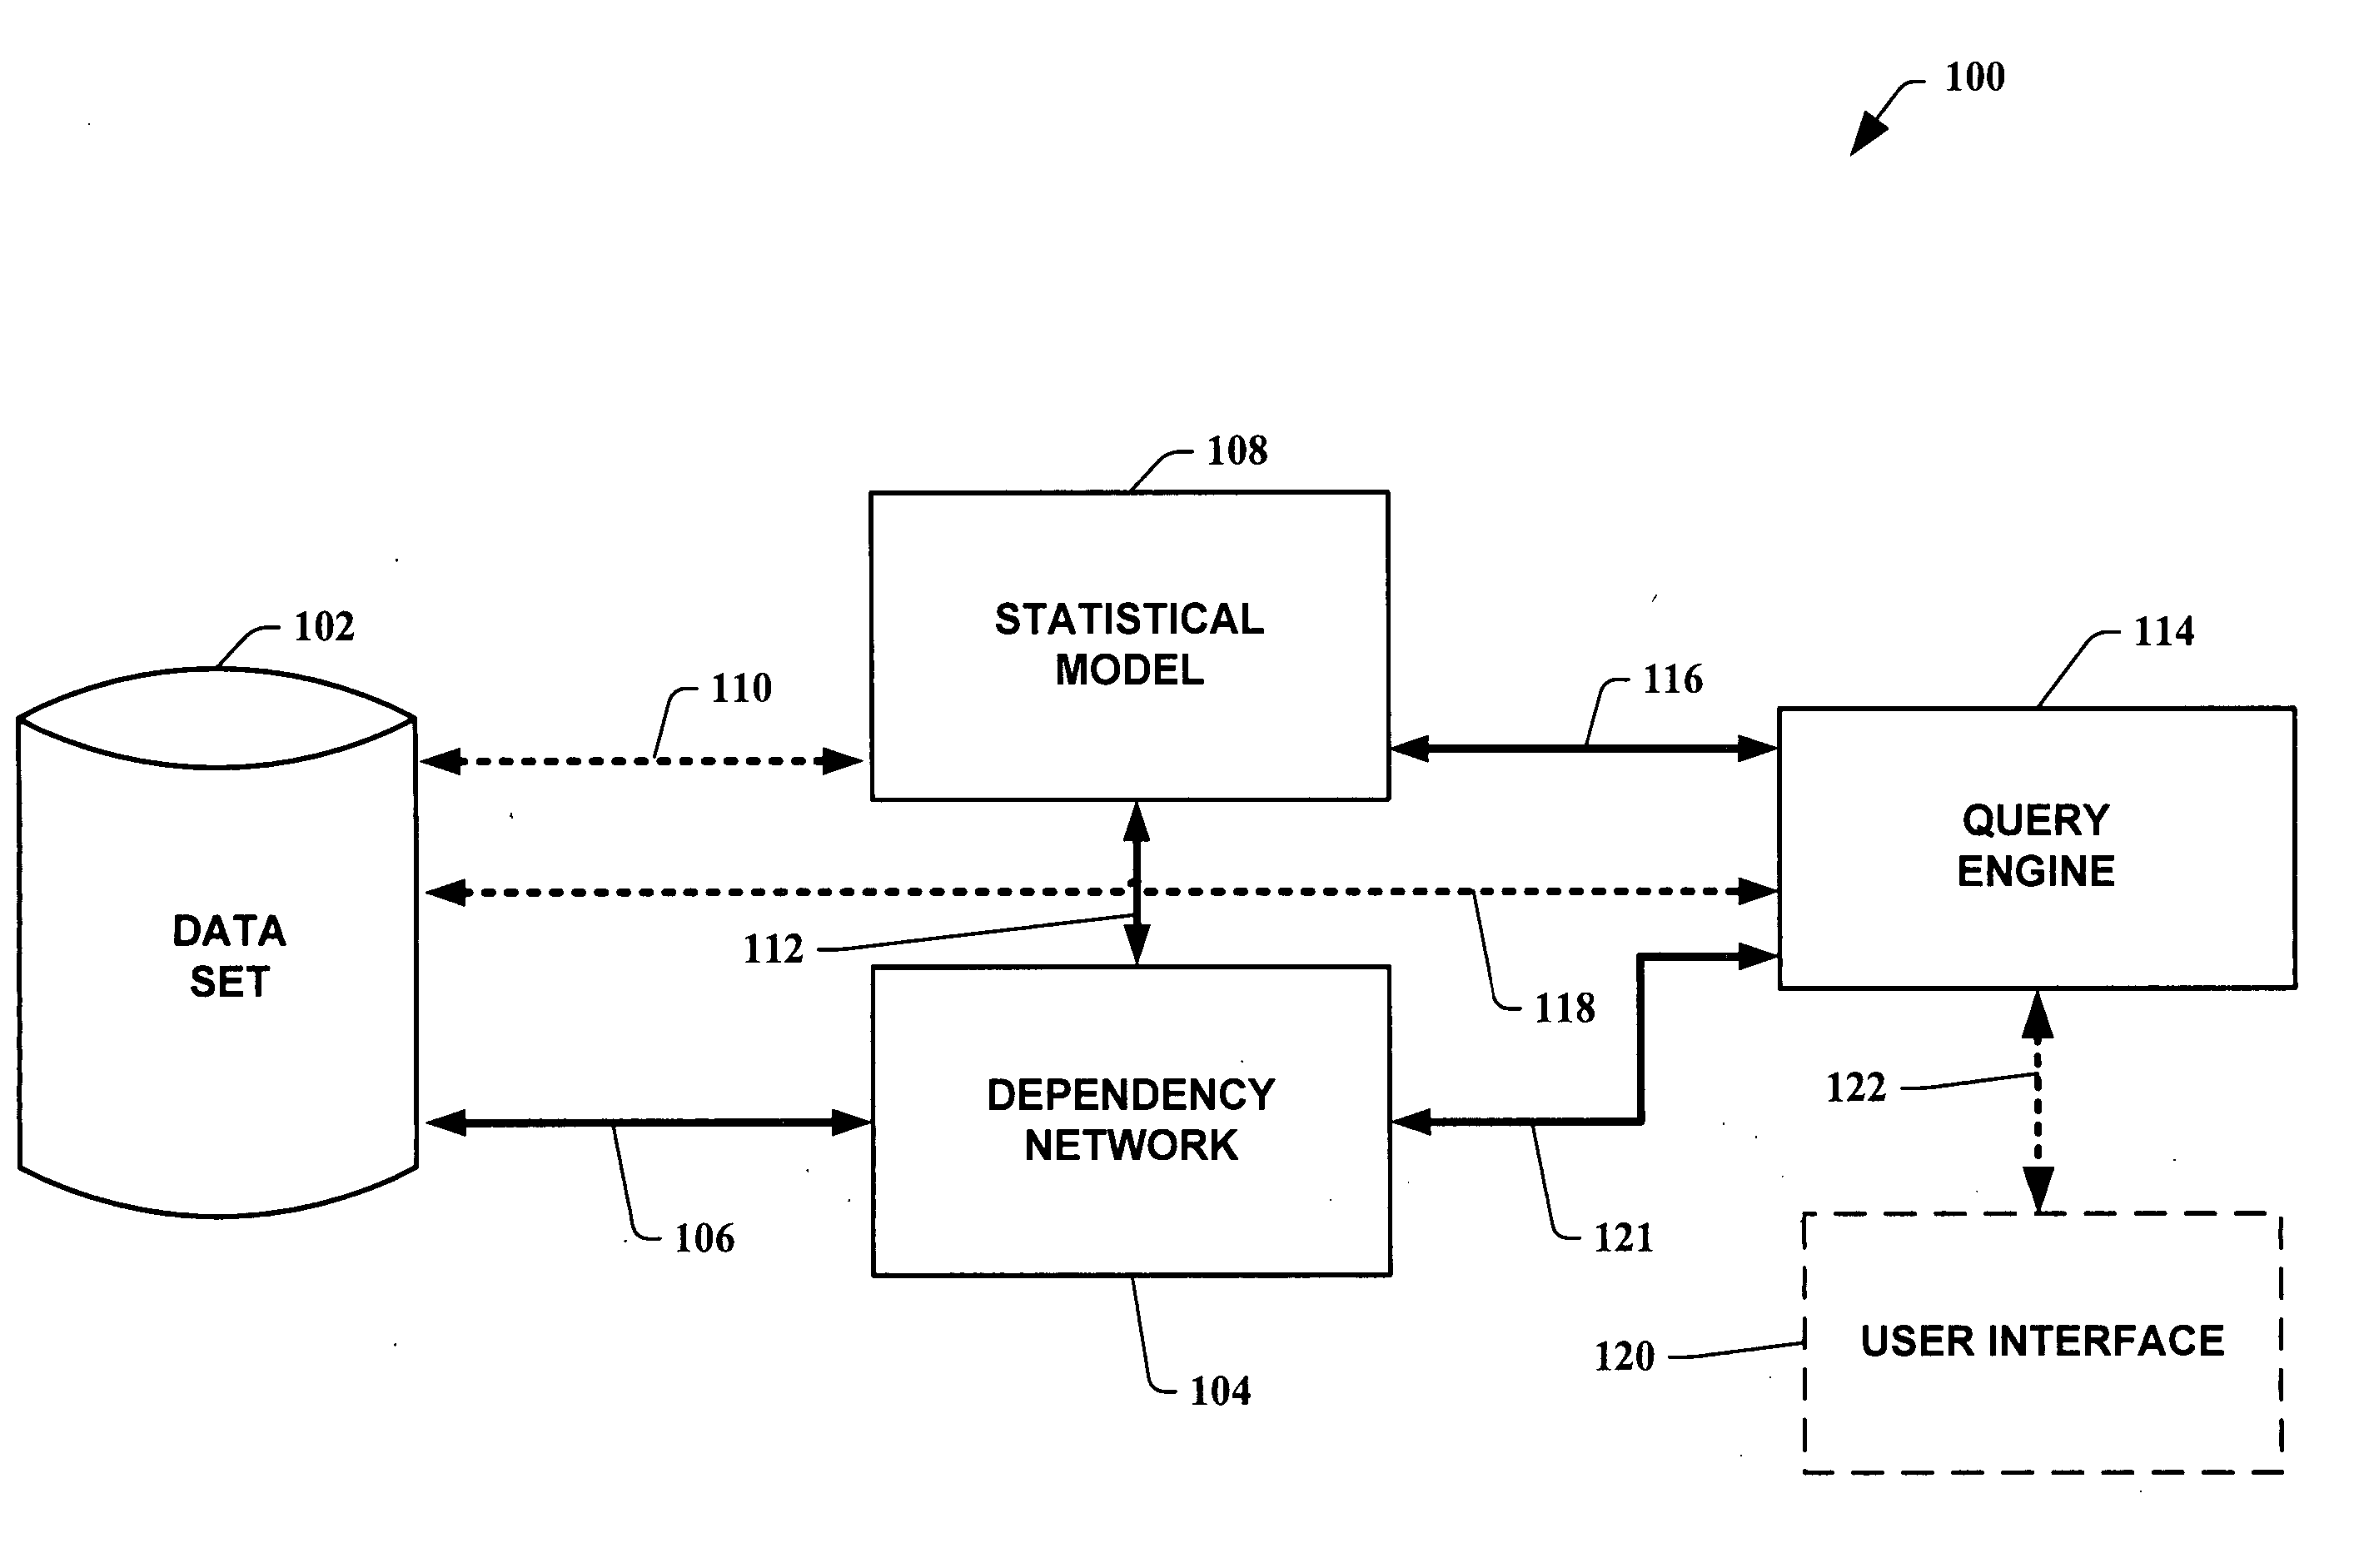 Dependency network based model (or pattern)